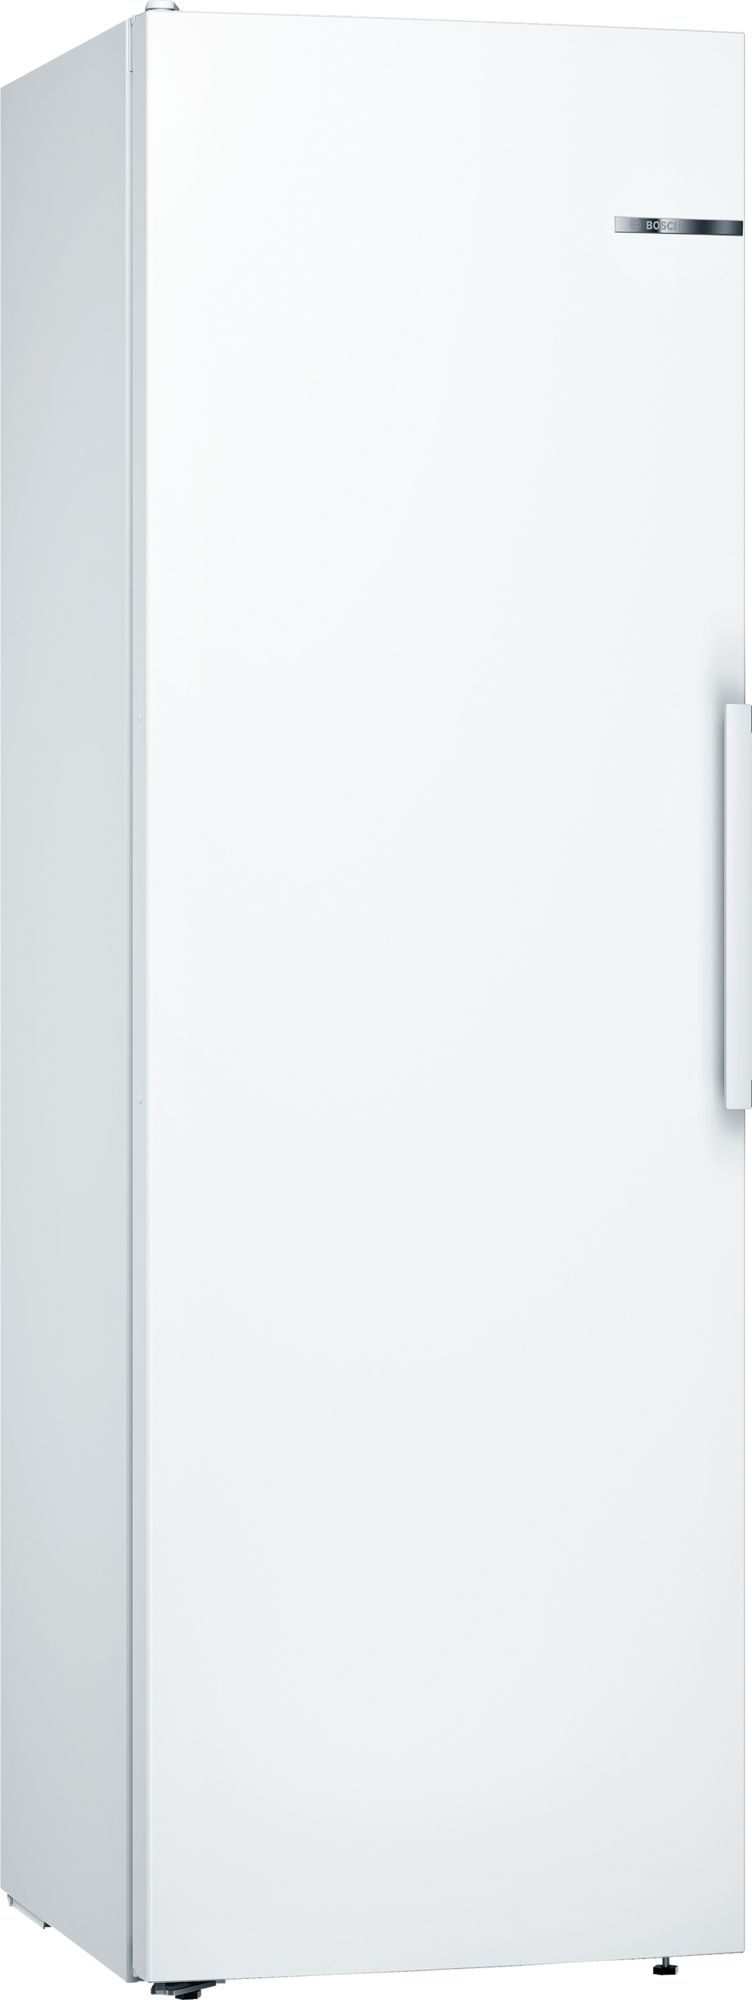 BOSCH KSV36VWEP vrijstaande koelkast zonder vriesvak - 186cm